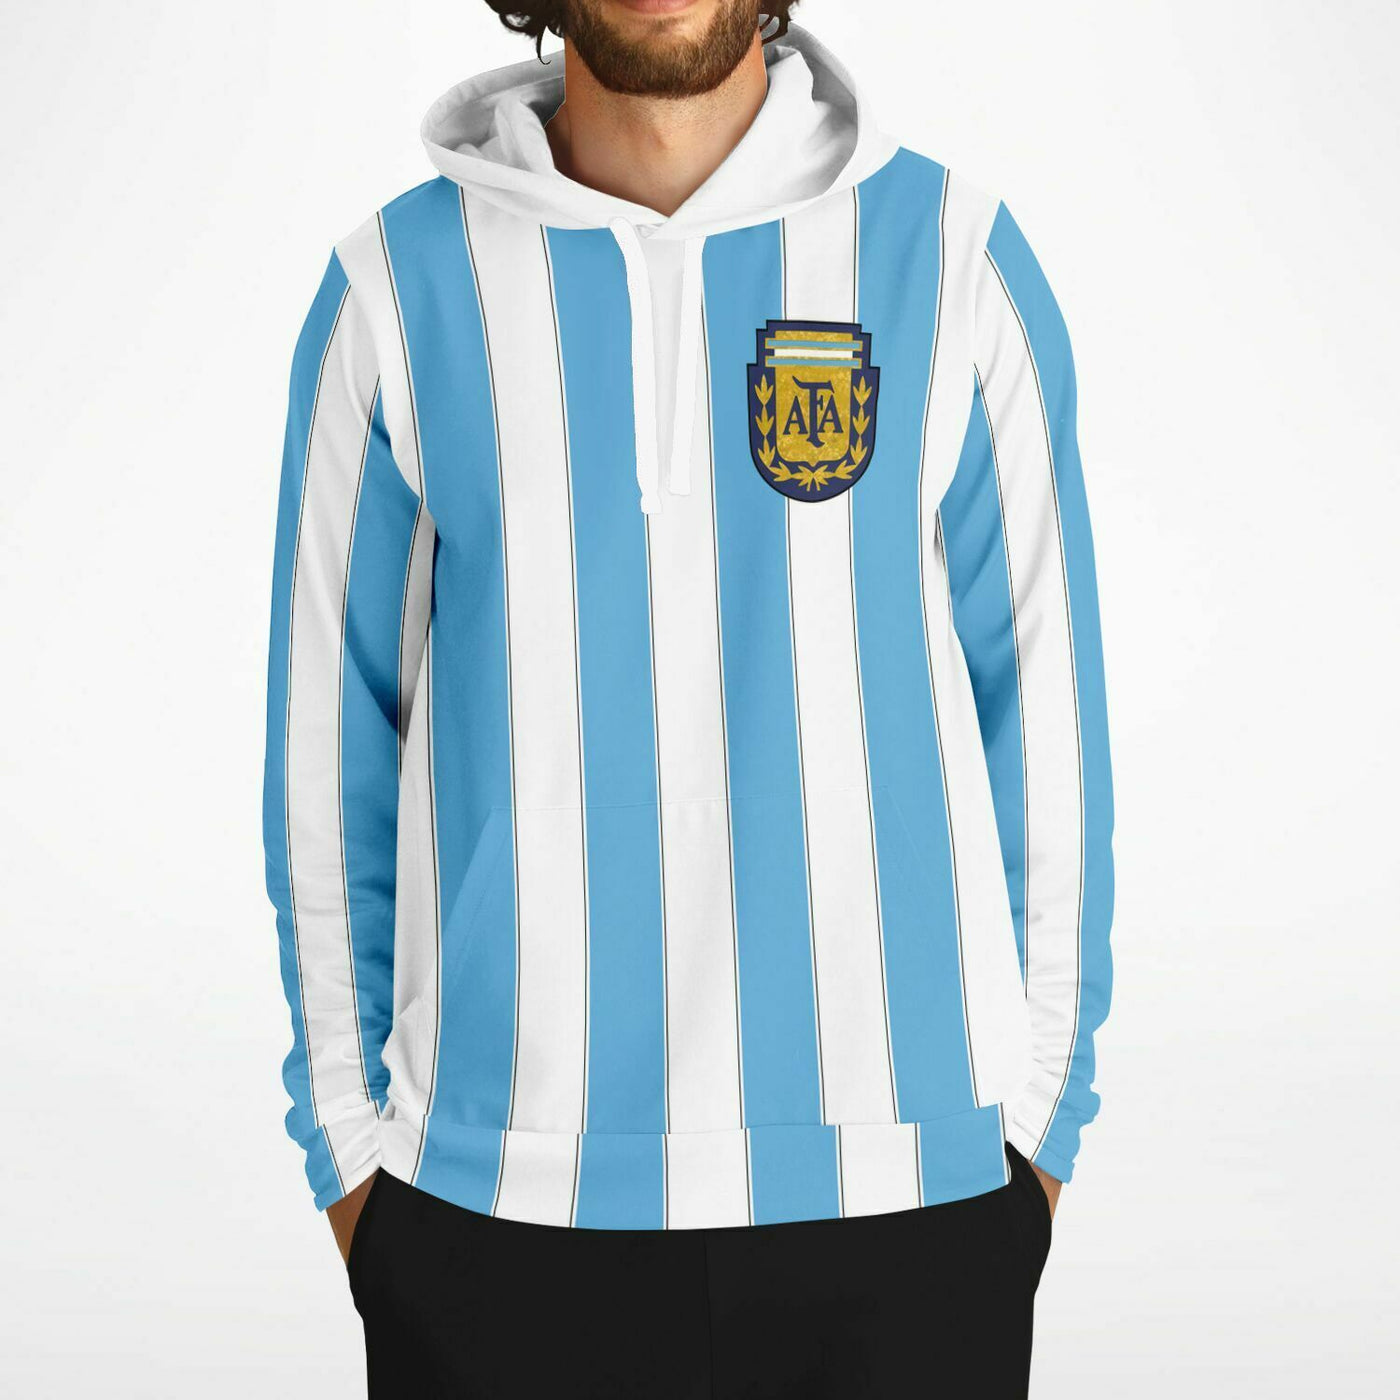 argentina soccer jersey retro